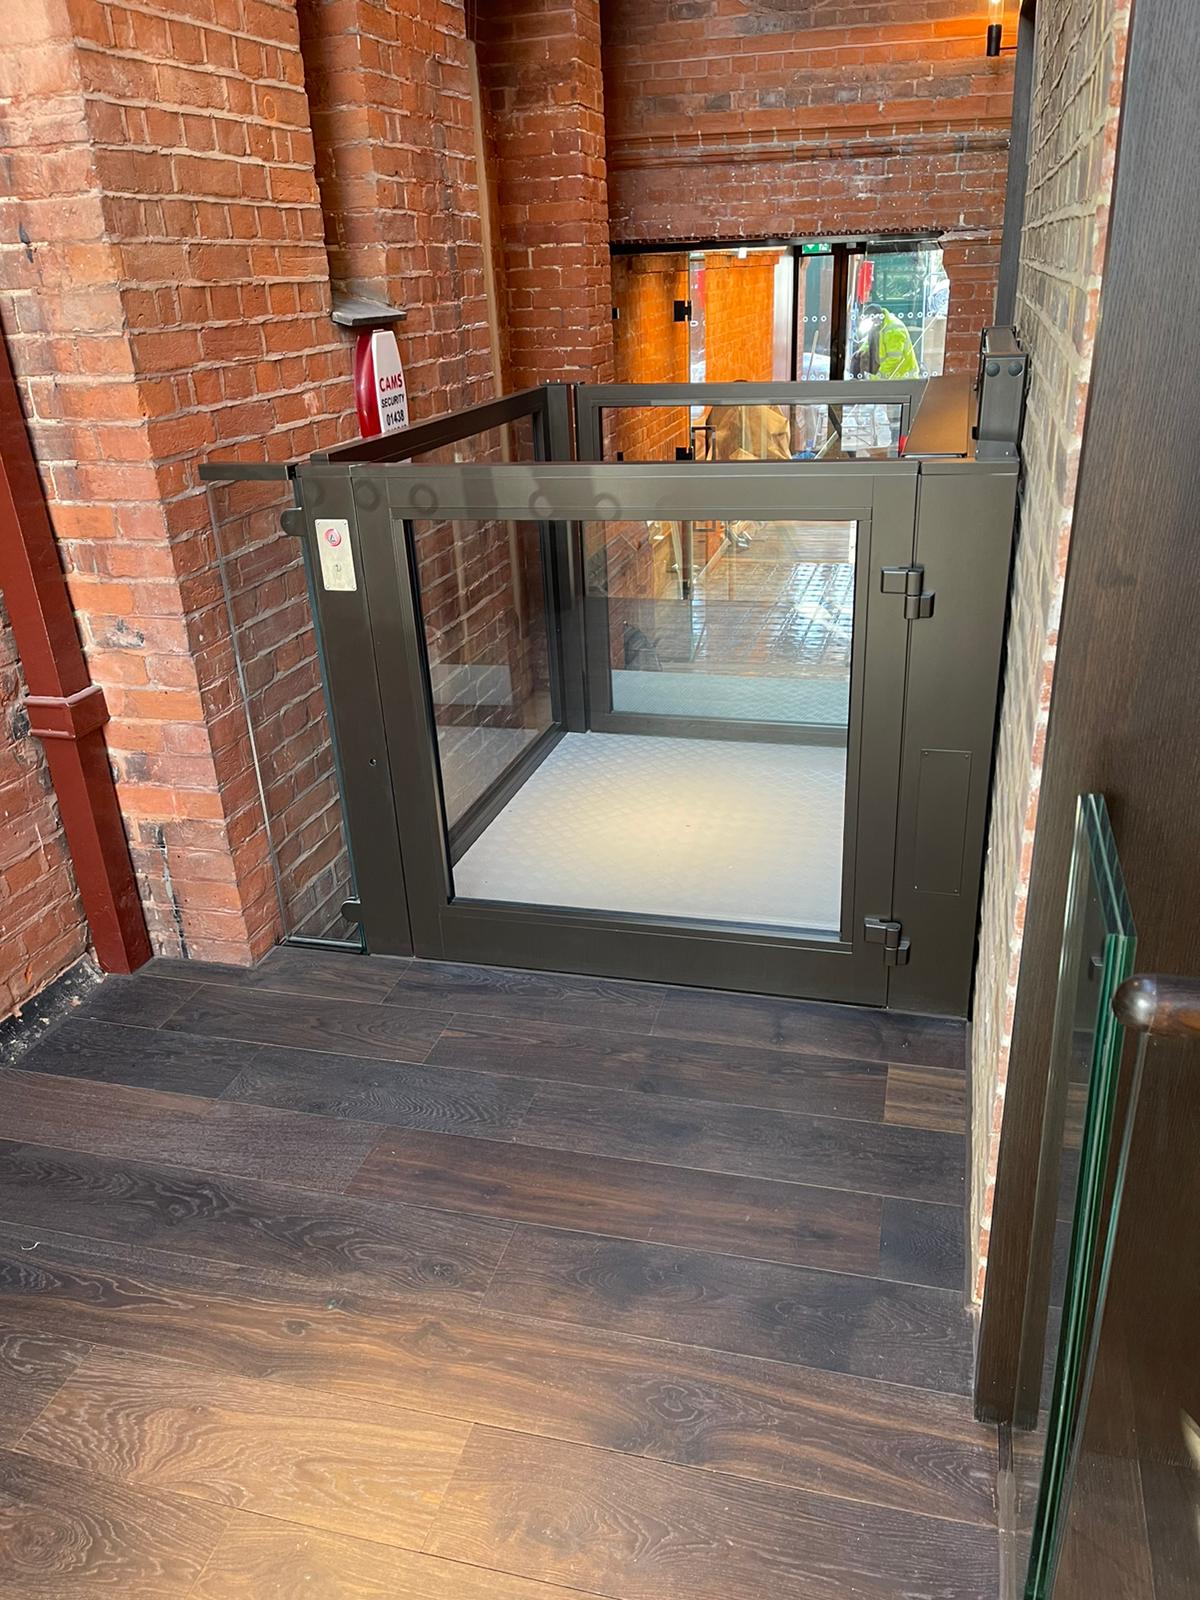 Open Platform Lift at Leighton House Museum